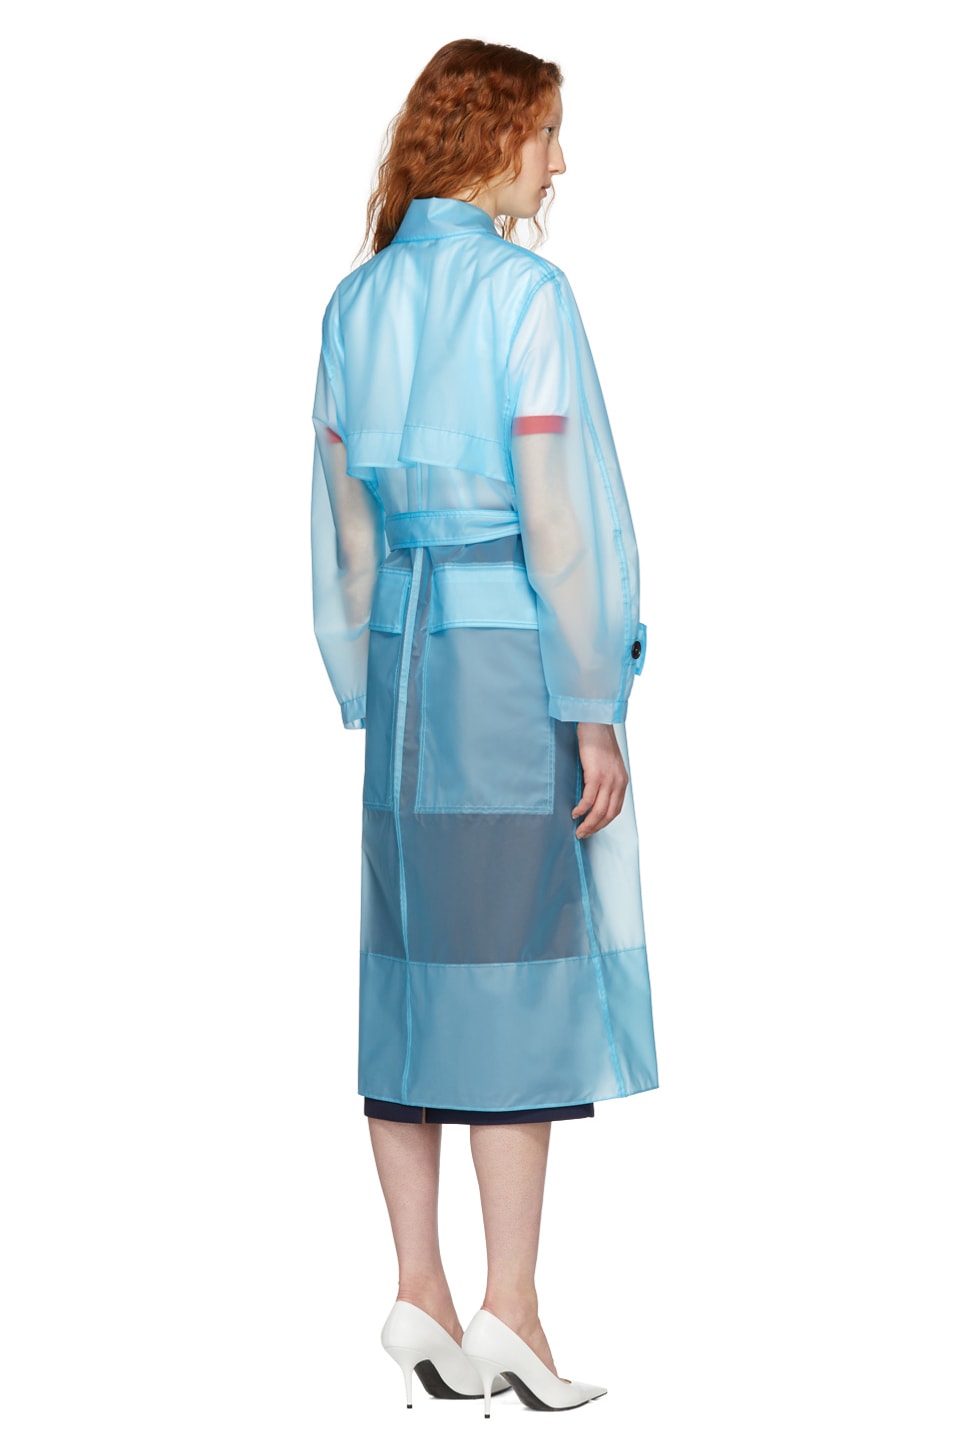 Calvin Klein Clear Blue Plastic Coat 2018 Trend Translucent Blue Raf Simons